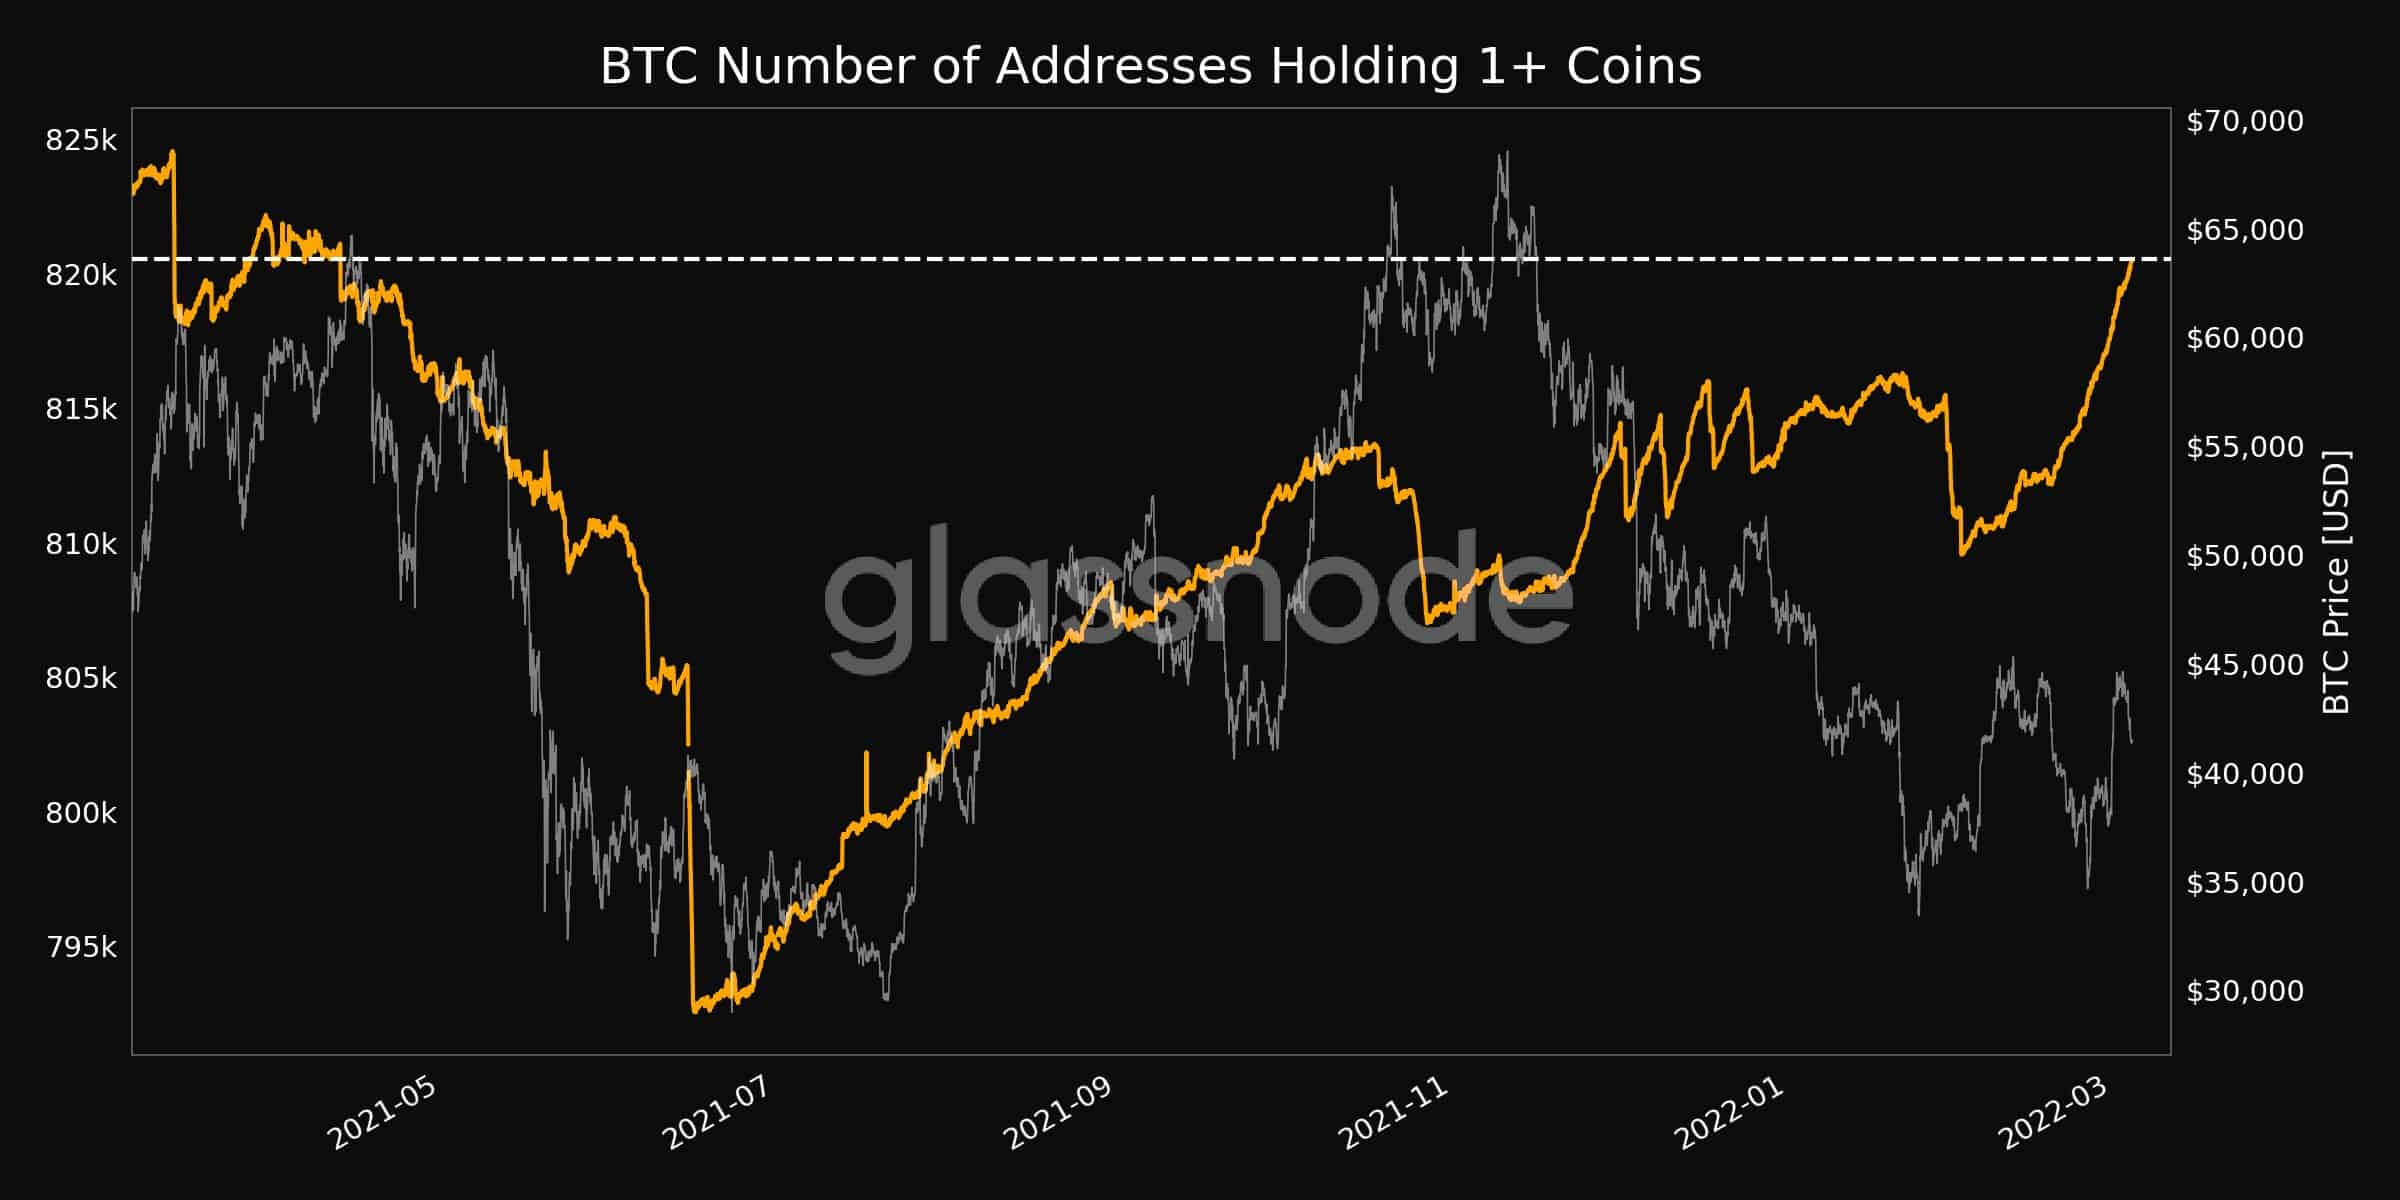 Bitcoin Addresses With 1+ BTC. Source: Glassnode